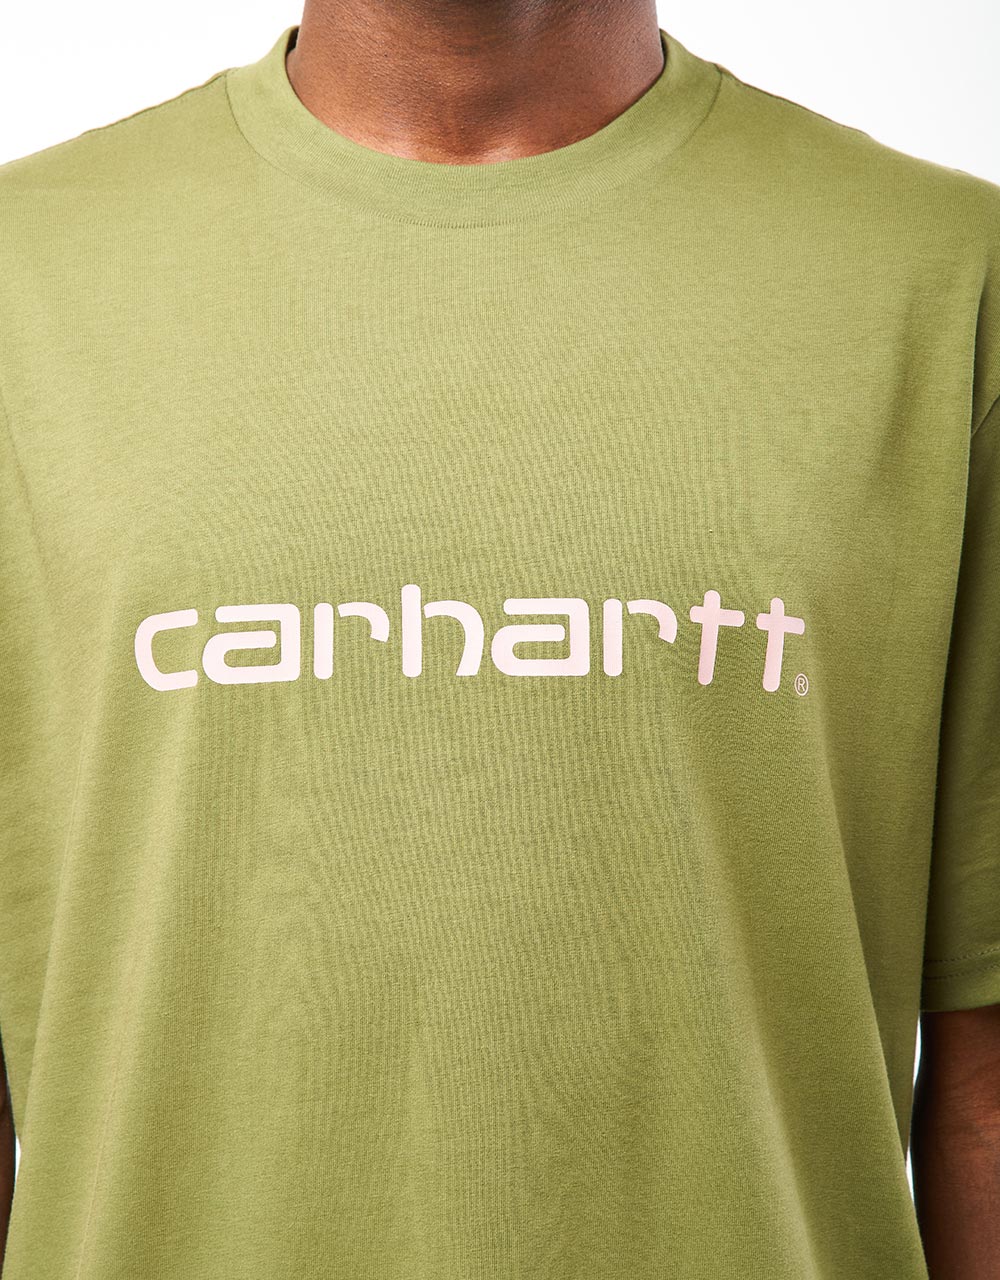 Carhartt WIP Script T-Shirt - Dundee/Glassy Pink